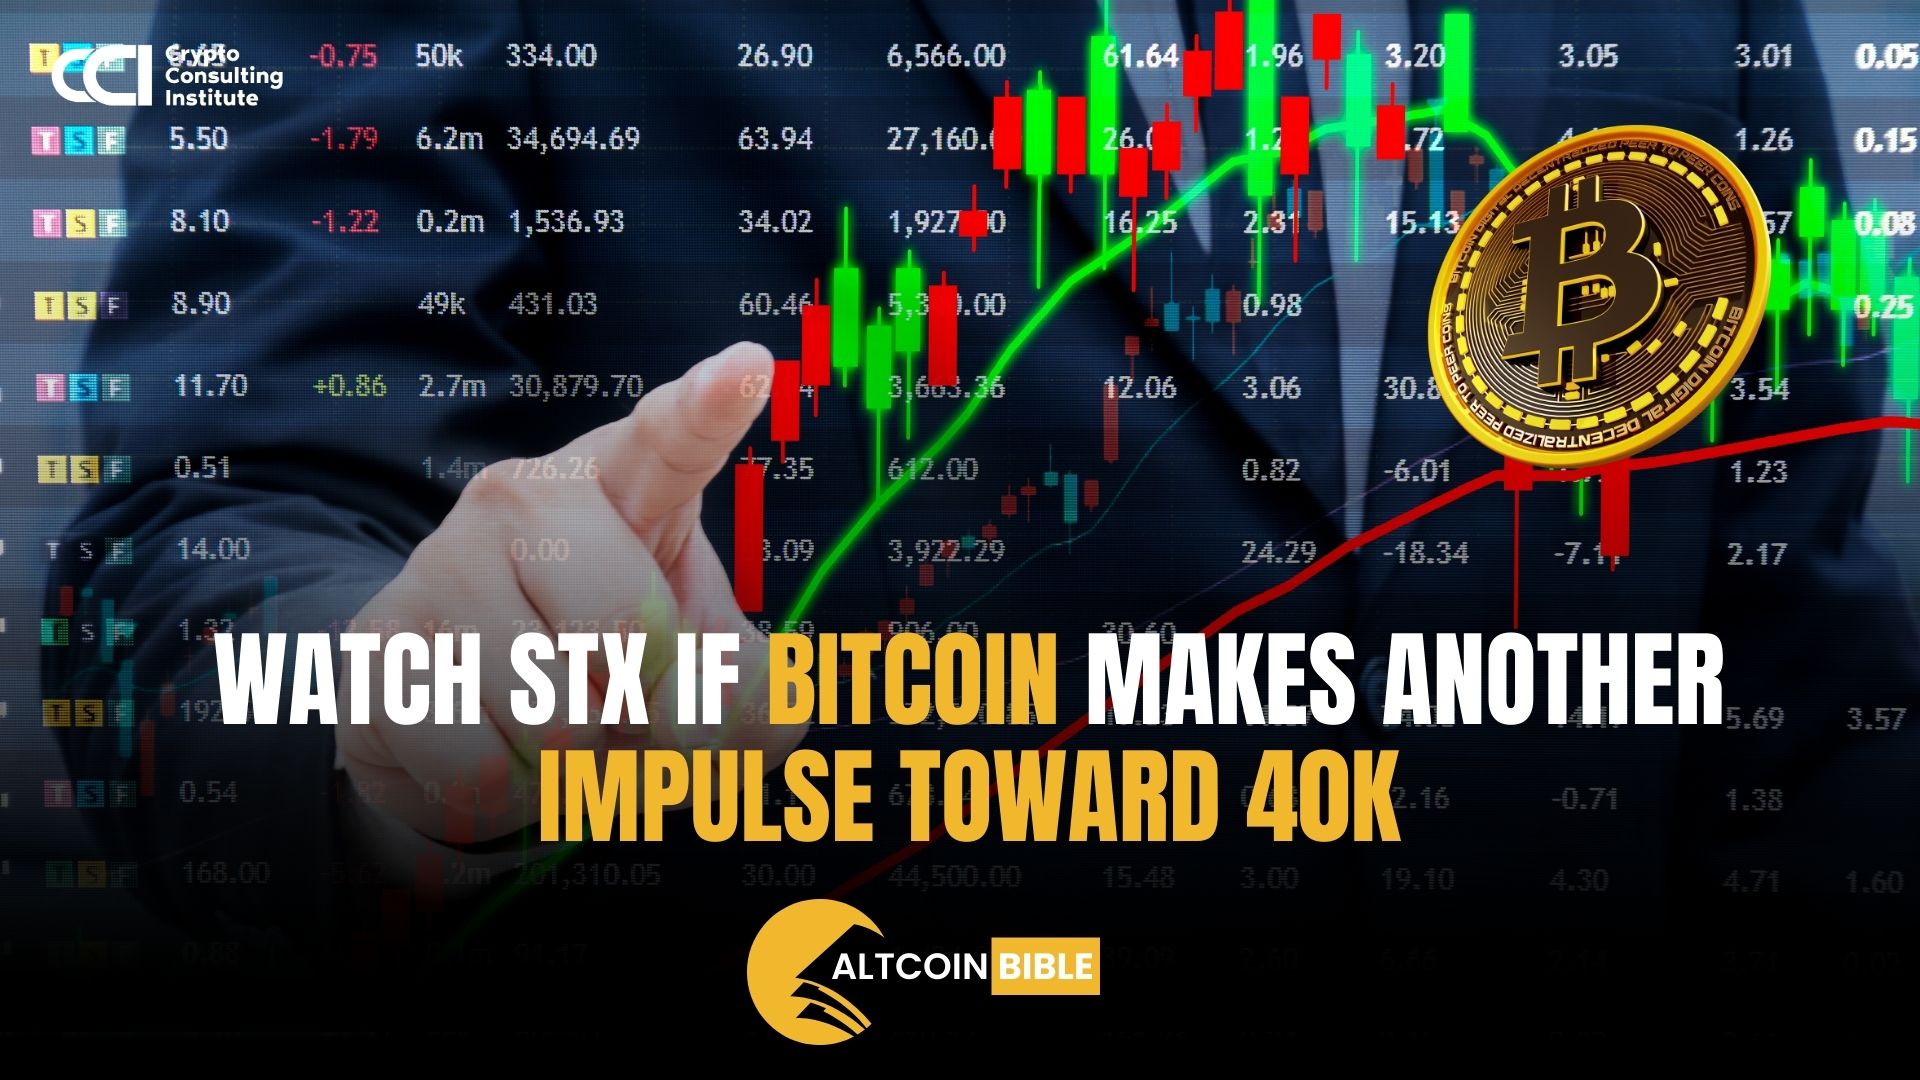 Watch STX if Bitcoin makes another impulse toward 40k